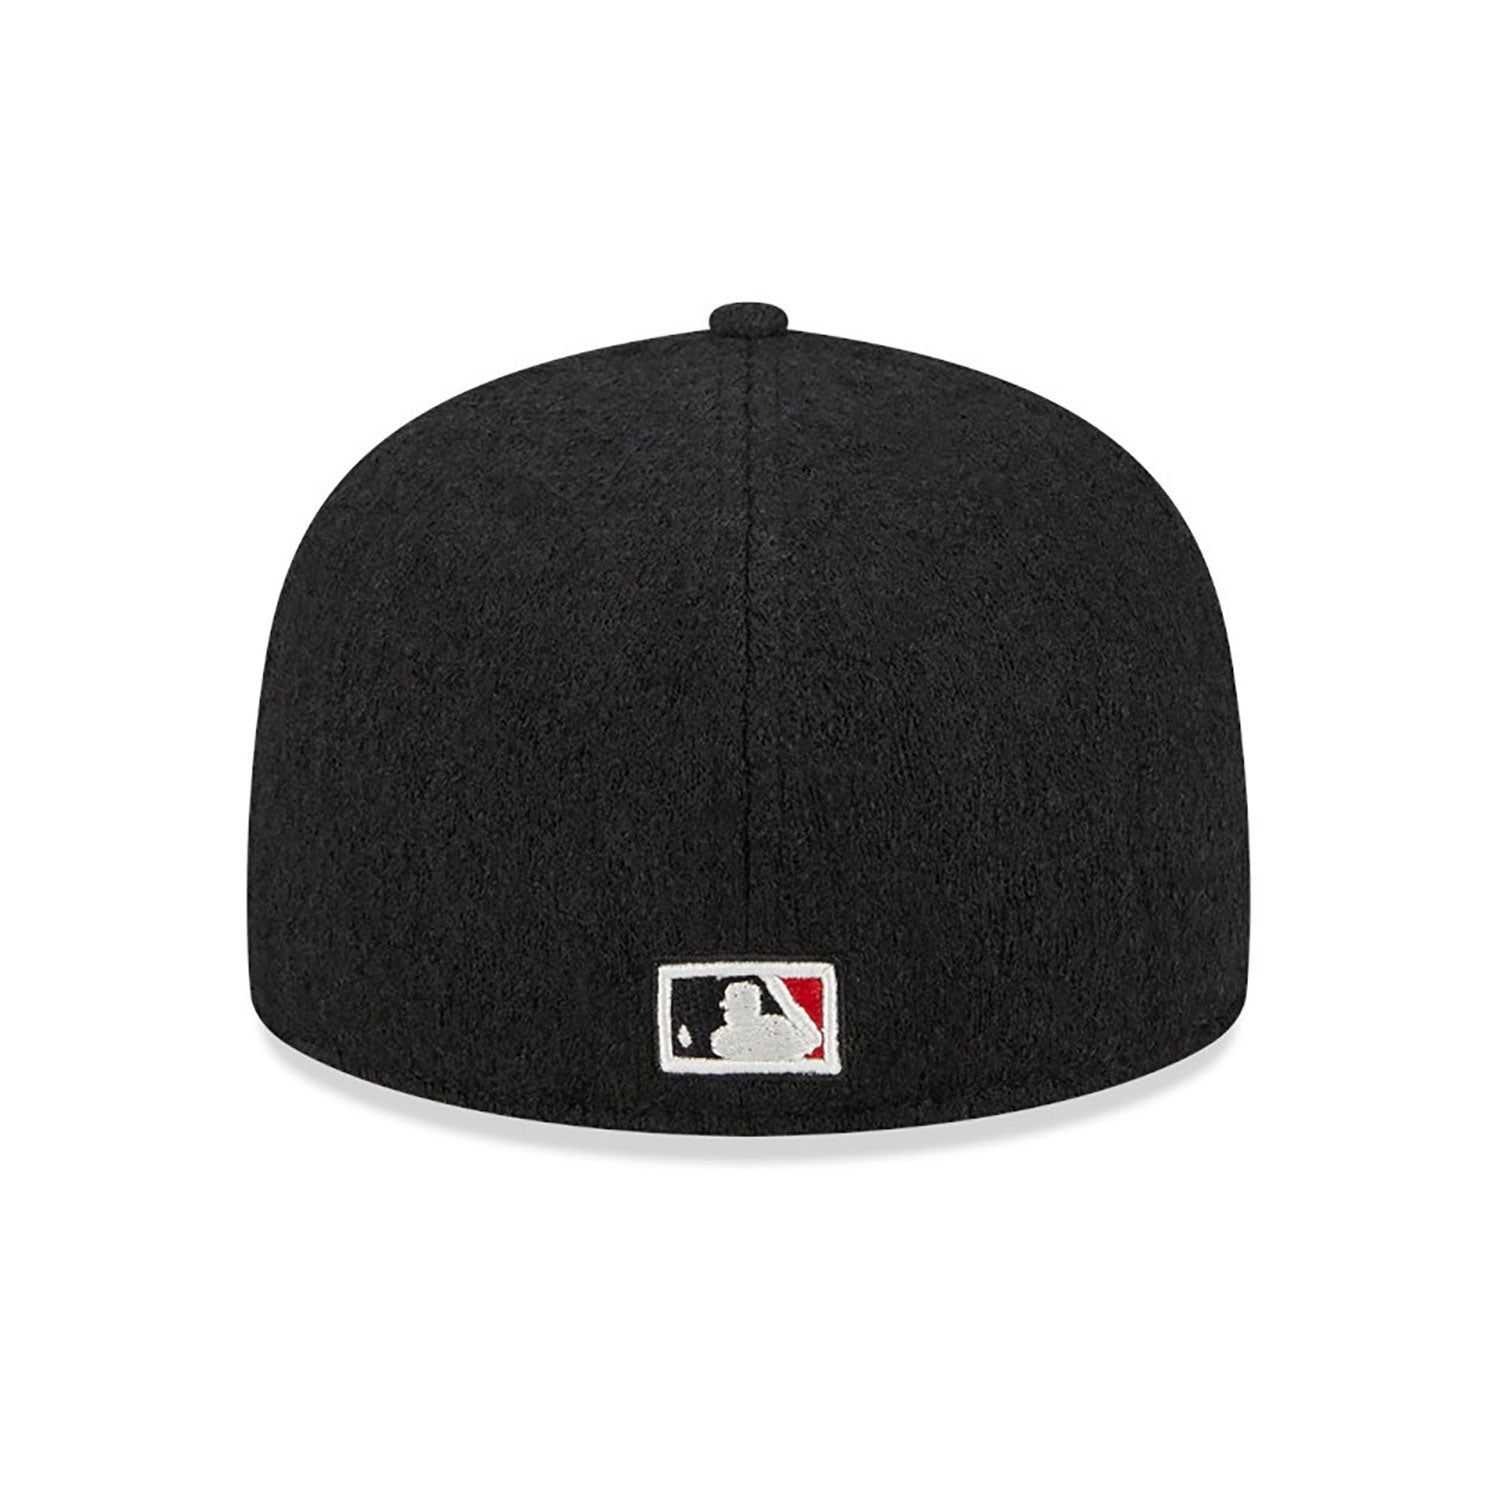 NEW ERA 59FIFTY MLB COOPERSTOWN WASHINGTON SENATORS BLACK FITTED CAP